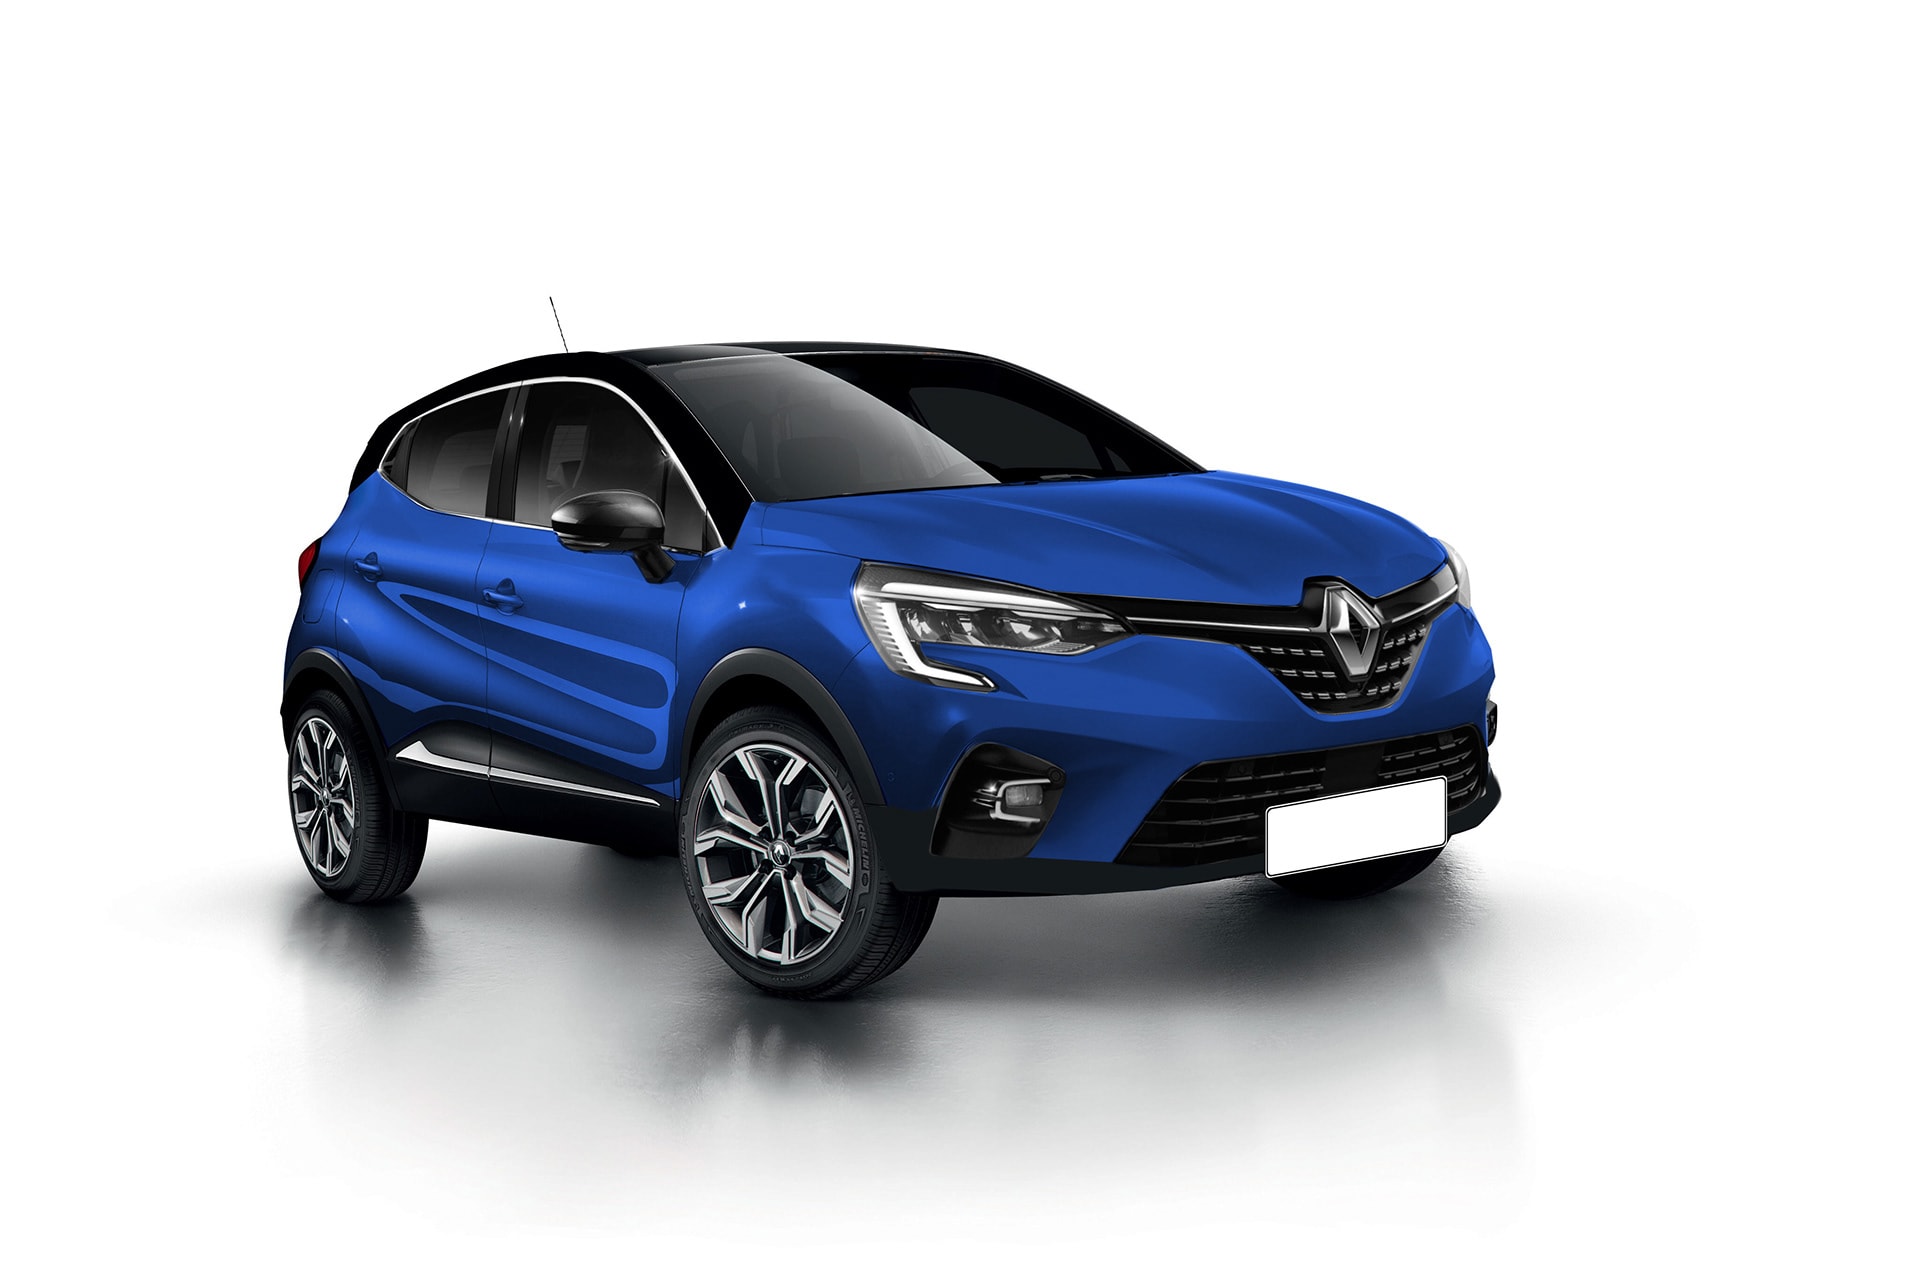 2016 Renault Megane 4 Rendered - autoevolution